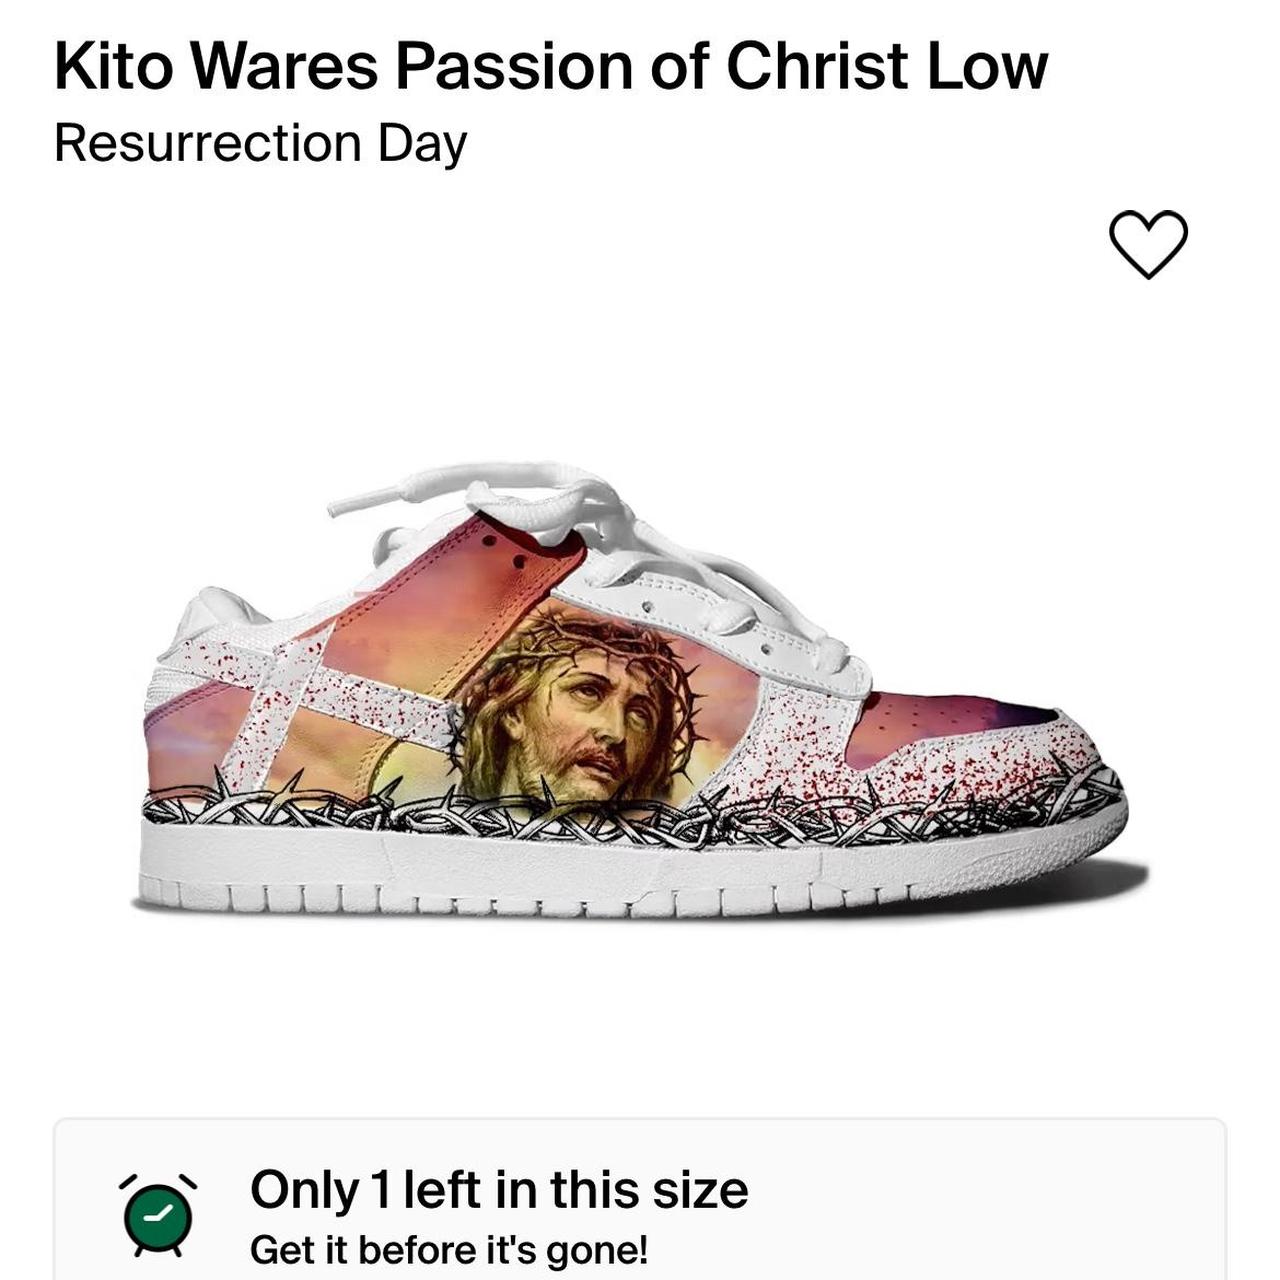 KITO WARES “PASSION OF CHRIST